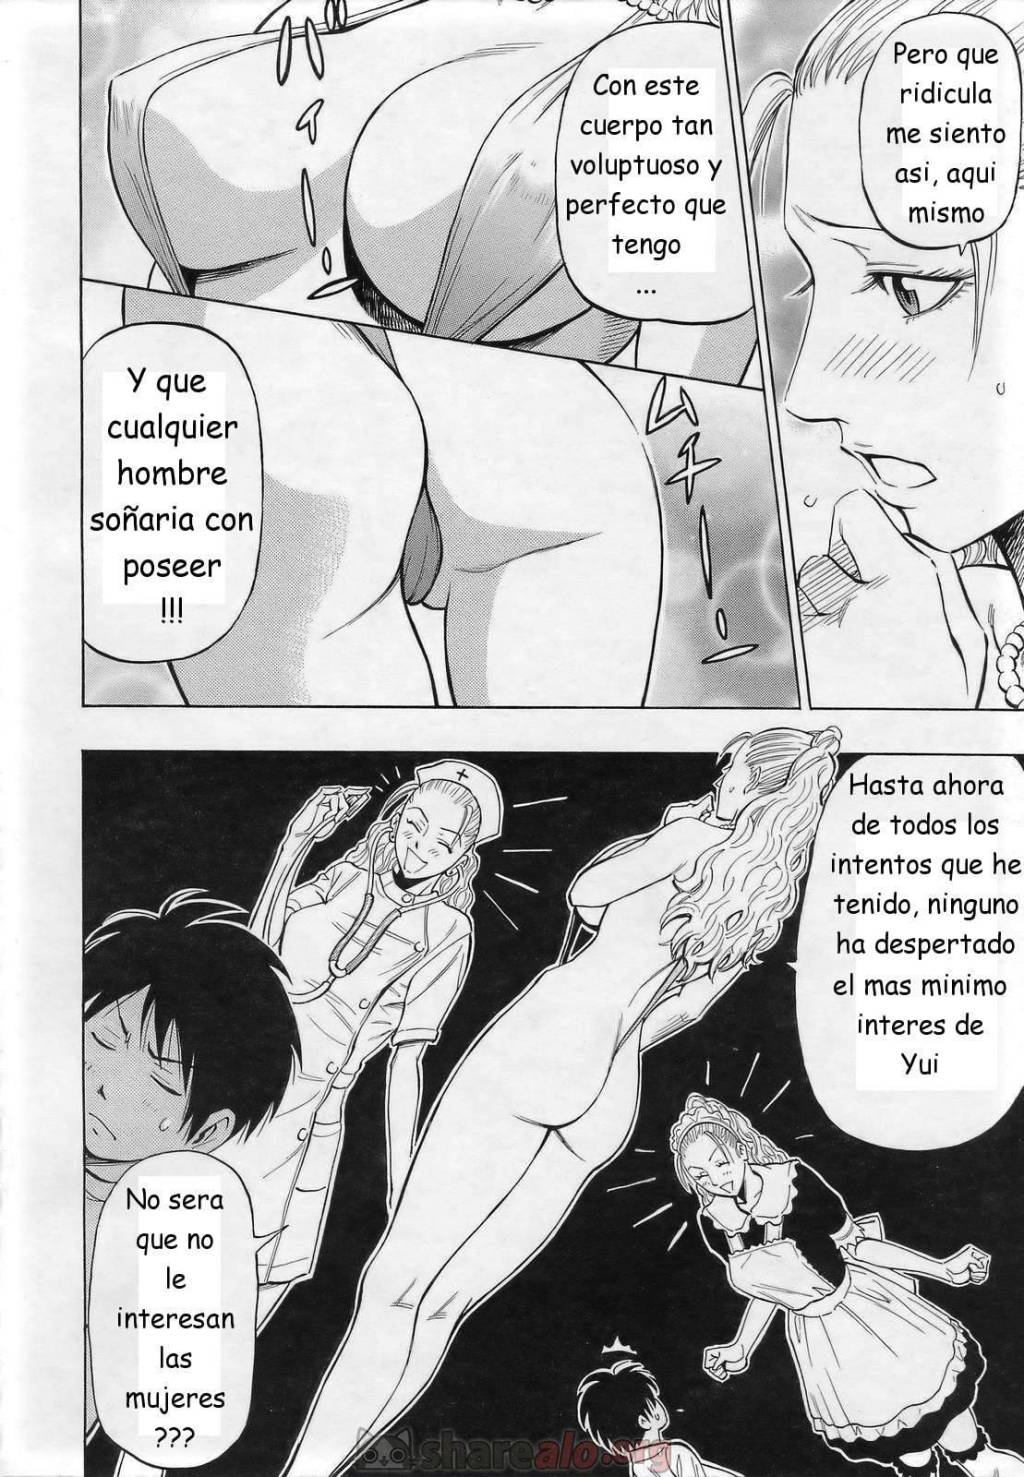 Sailor Mama (Mama Marinerita) - 4 - Comics Porno - Hentai Manga - Cartoon XXX